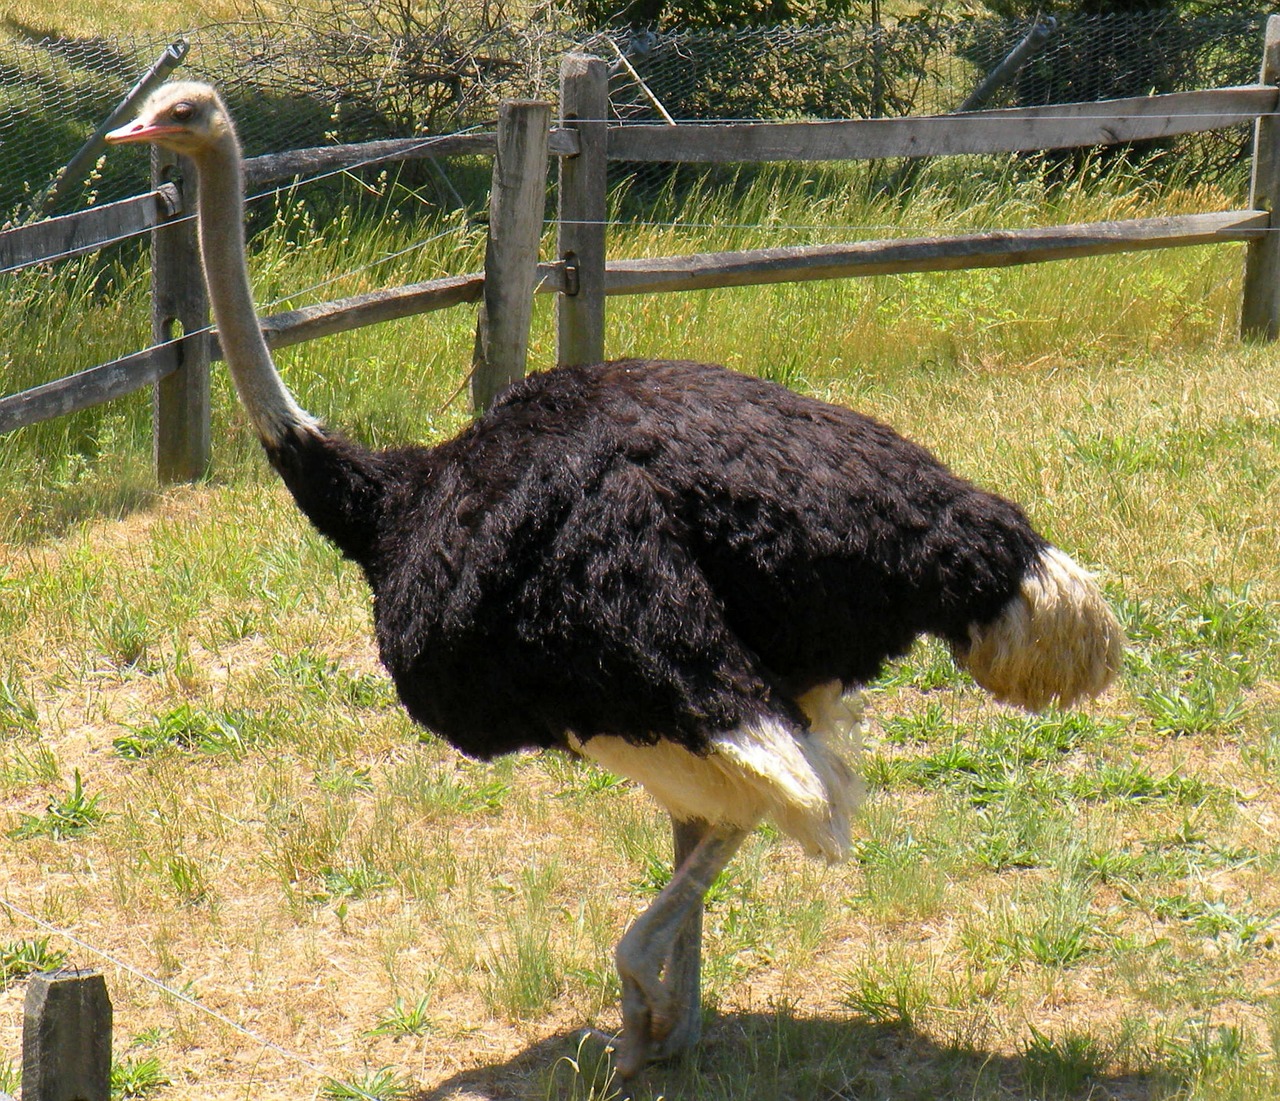 ostrich bird nature free photo